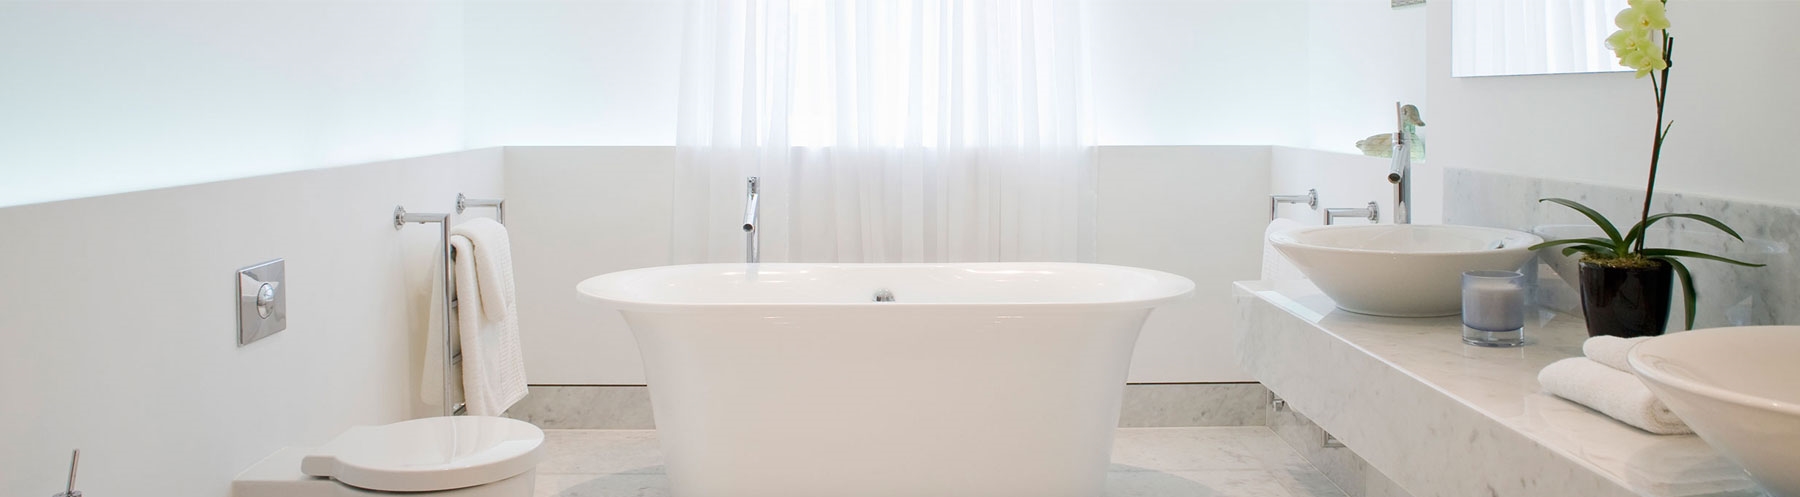 Беспроблемная ванная комната доставит вашу квартиру